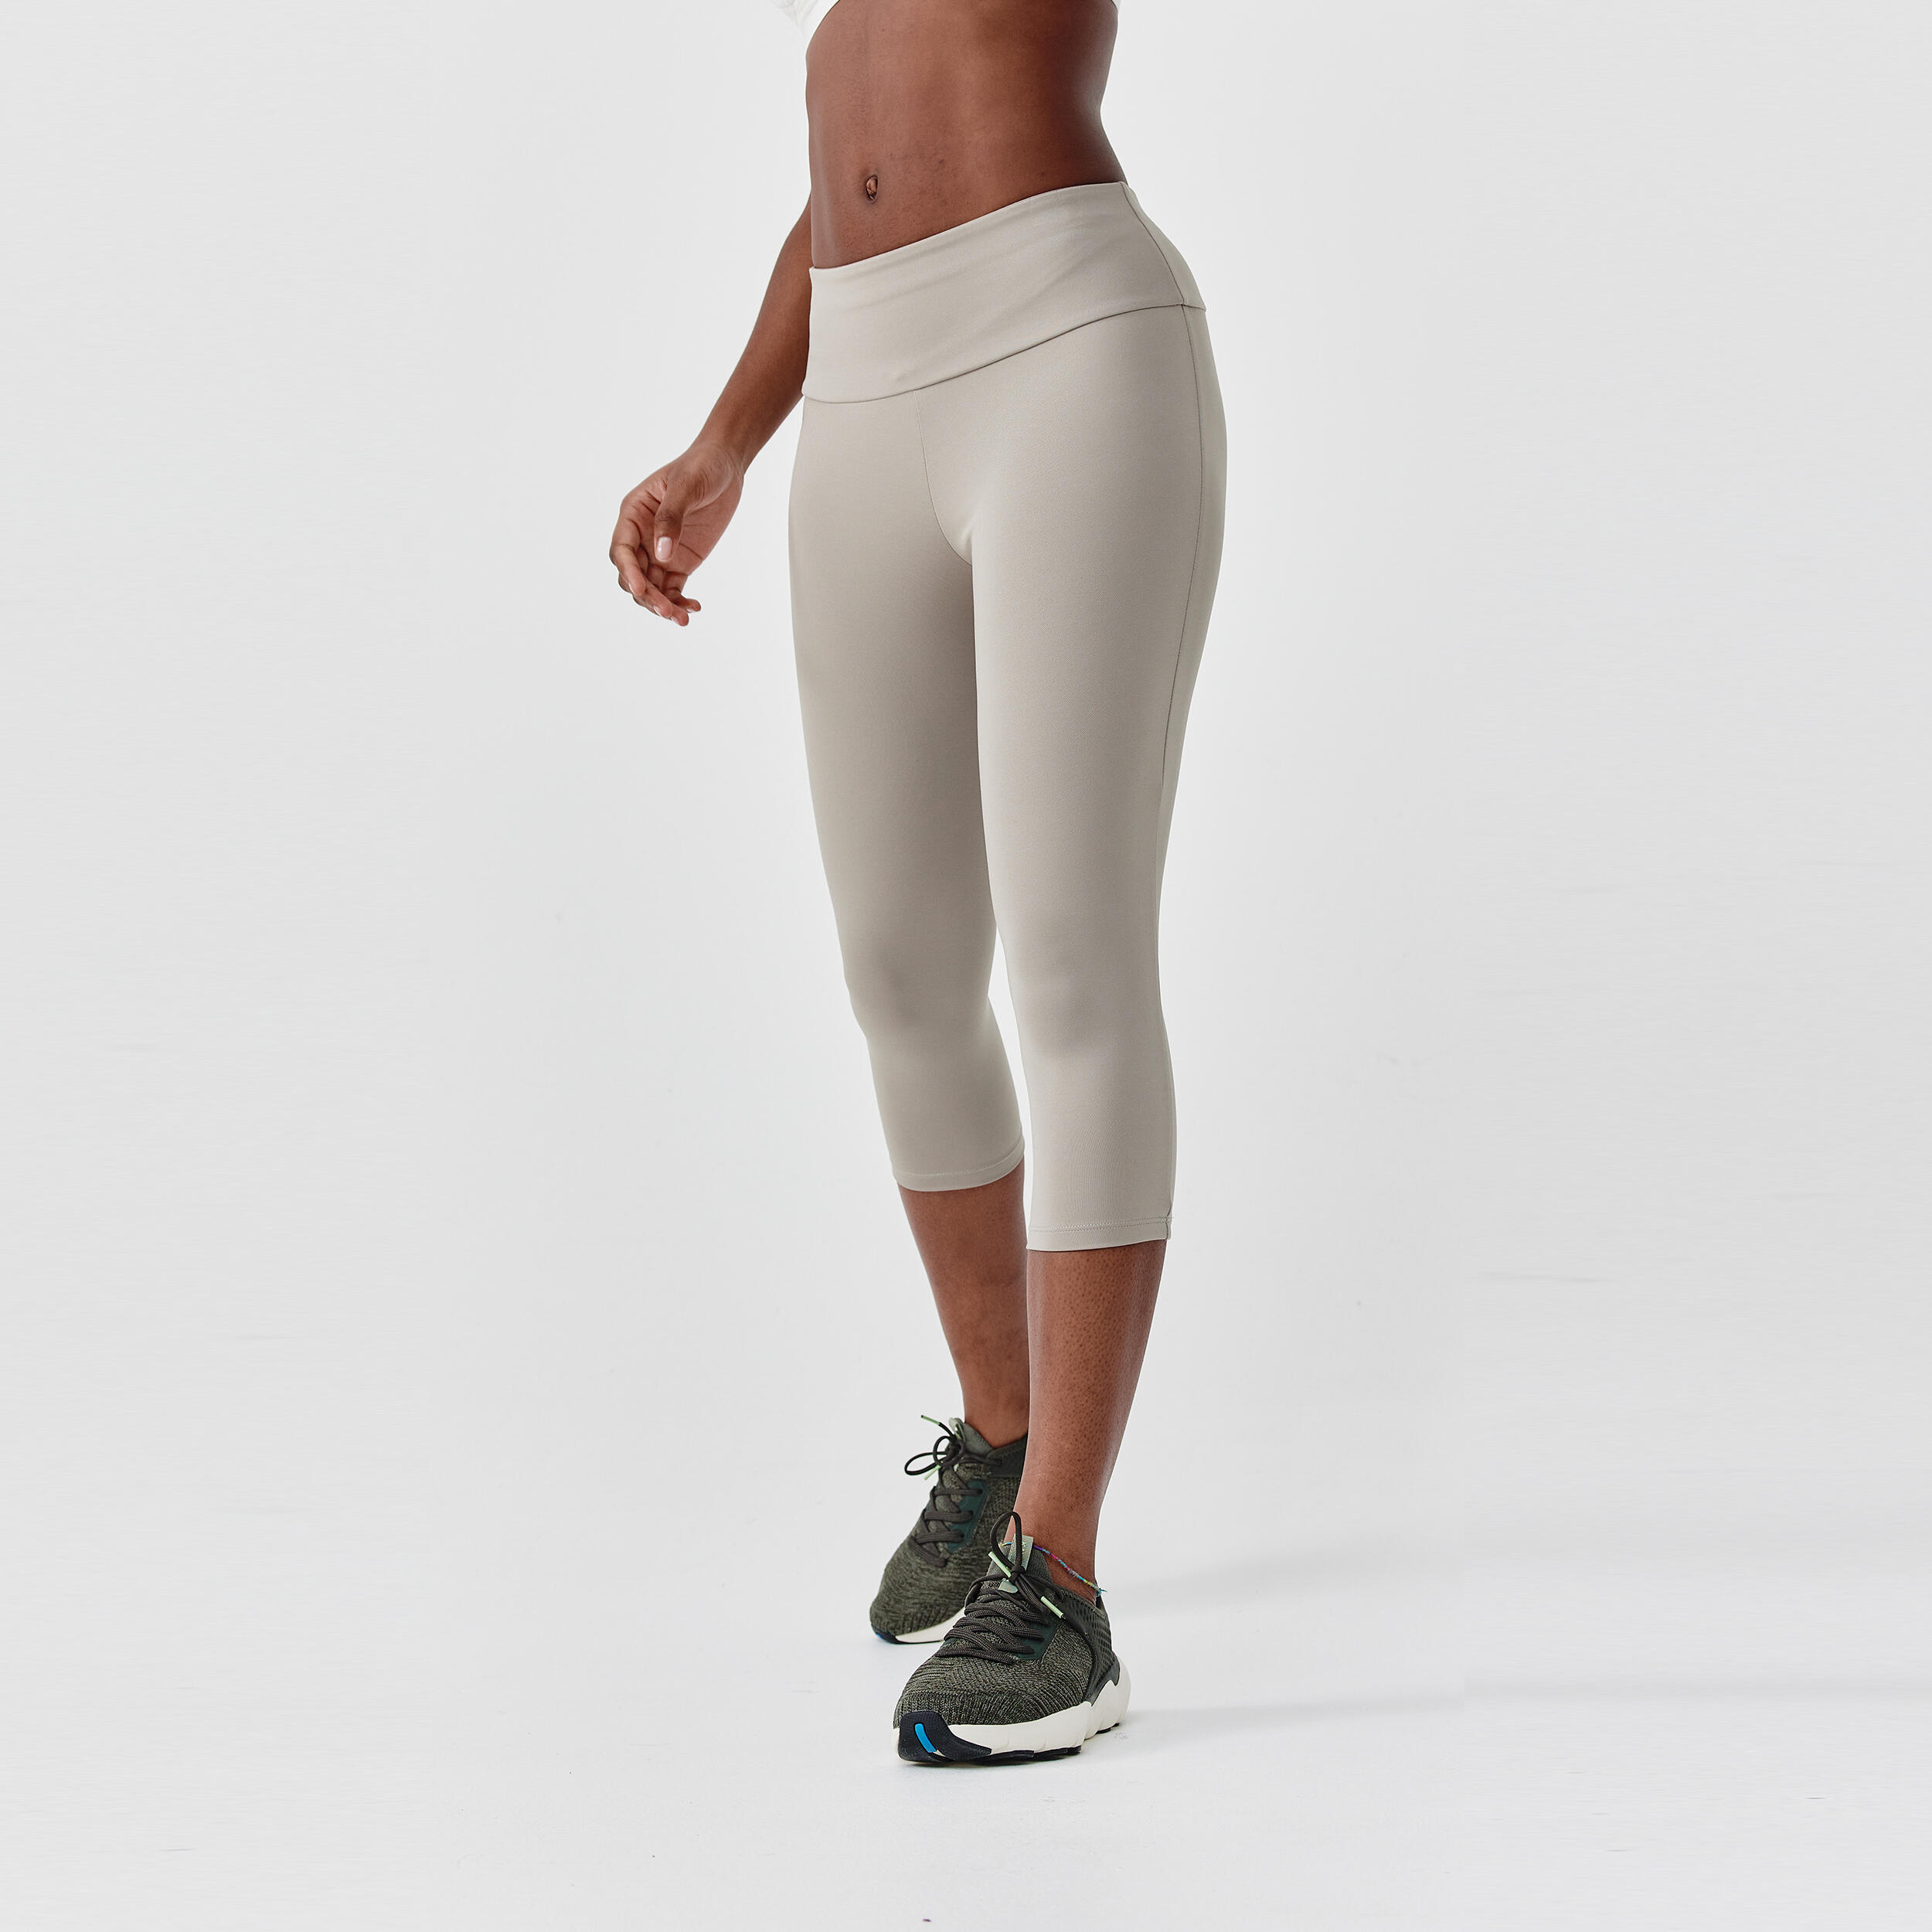 Eono Leggins Sportivi Donna Push Up Leggings Vita Alta Pantaloni Yoga Visita lo Store di EonoBrand 